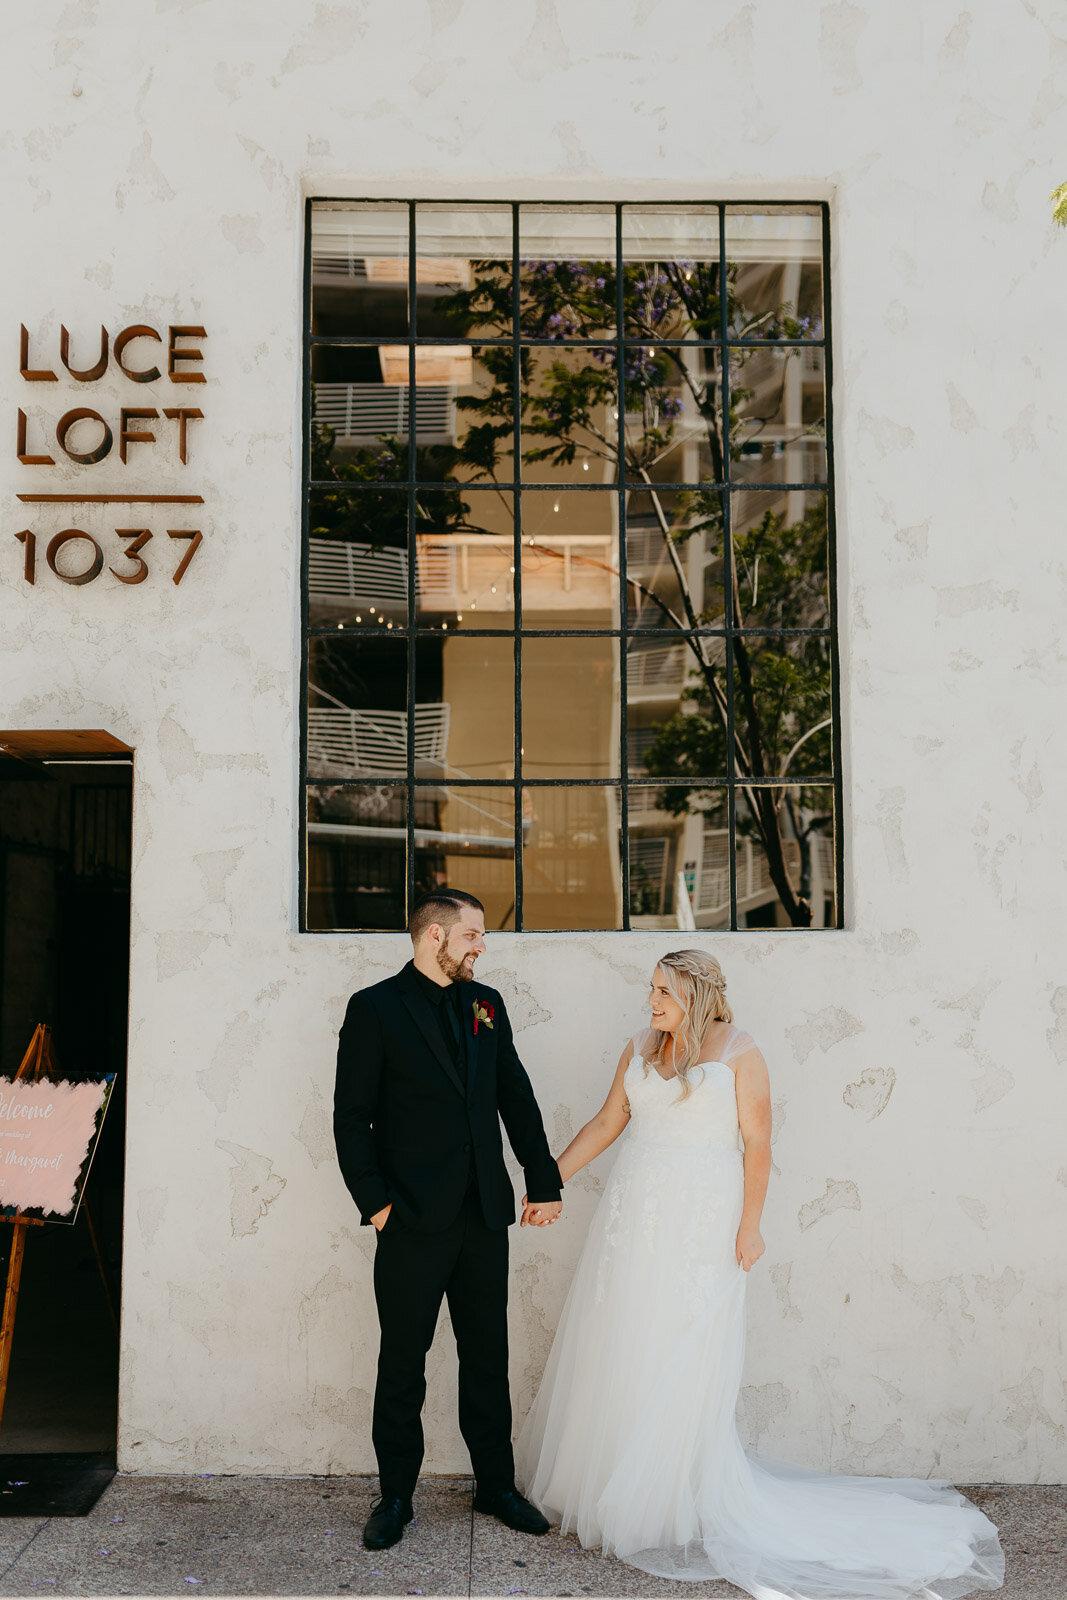 Lexx-Creative-Luce-Loft-Downtown-San-Diego-Wedding-24